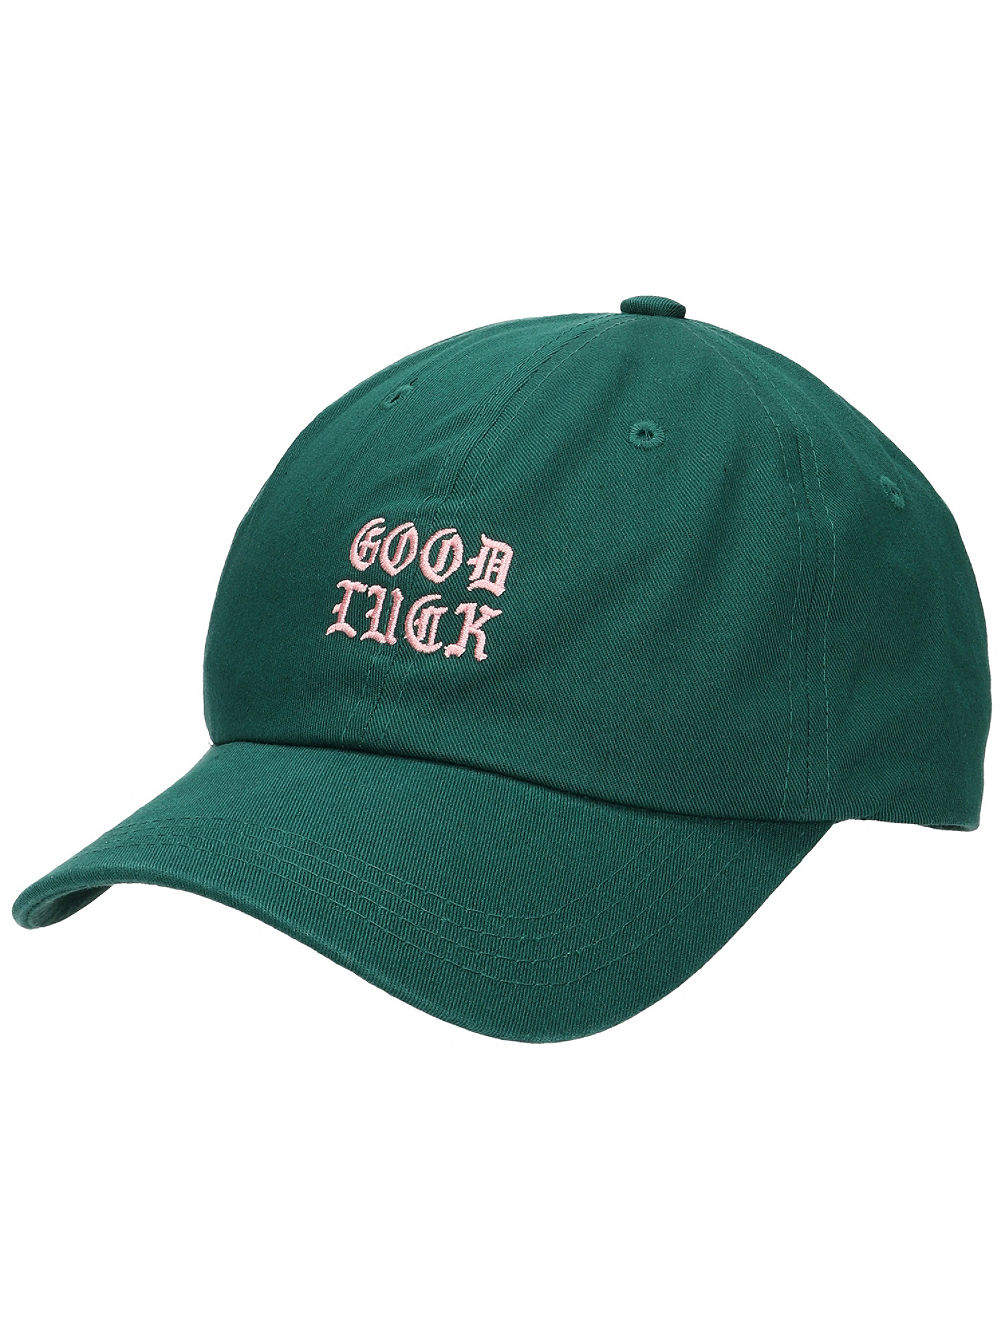 Good Luck Dad Hat Cap